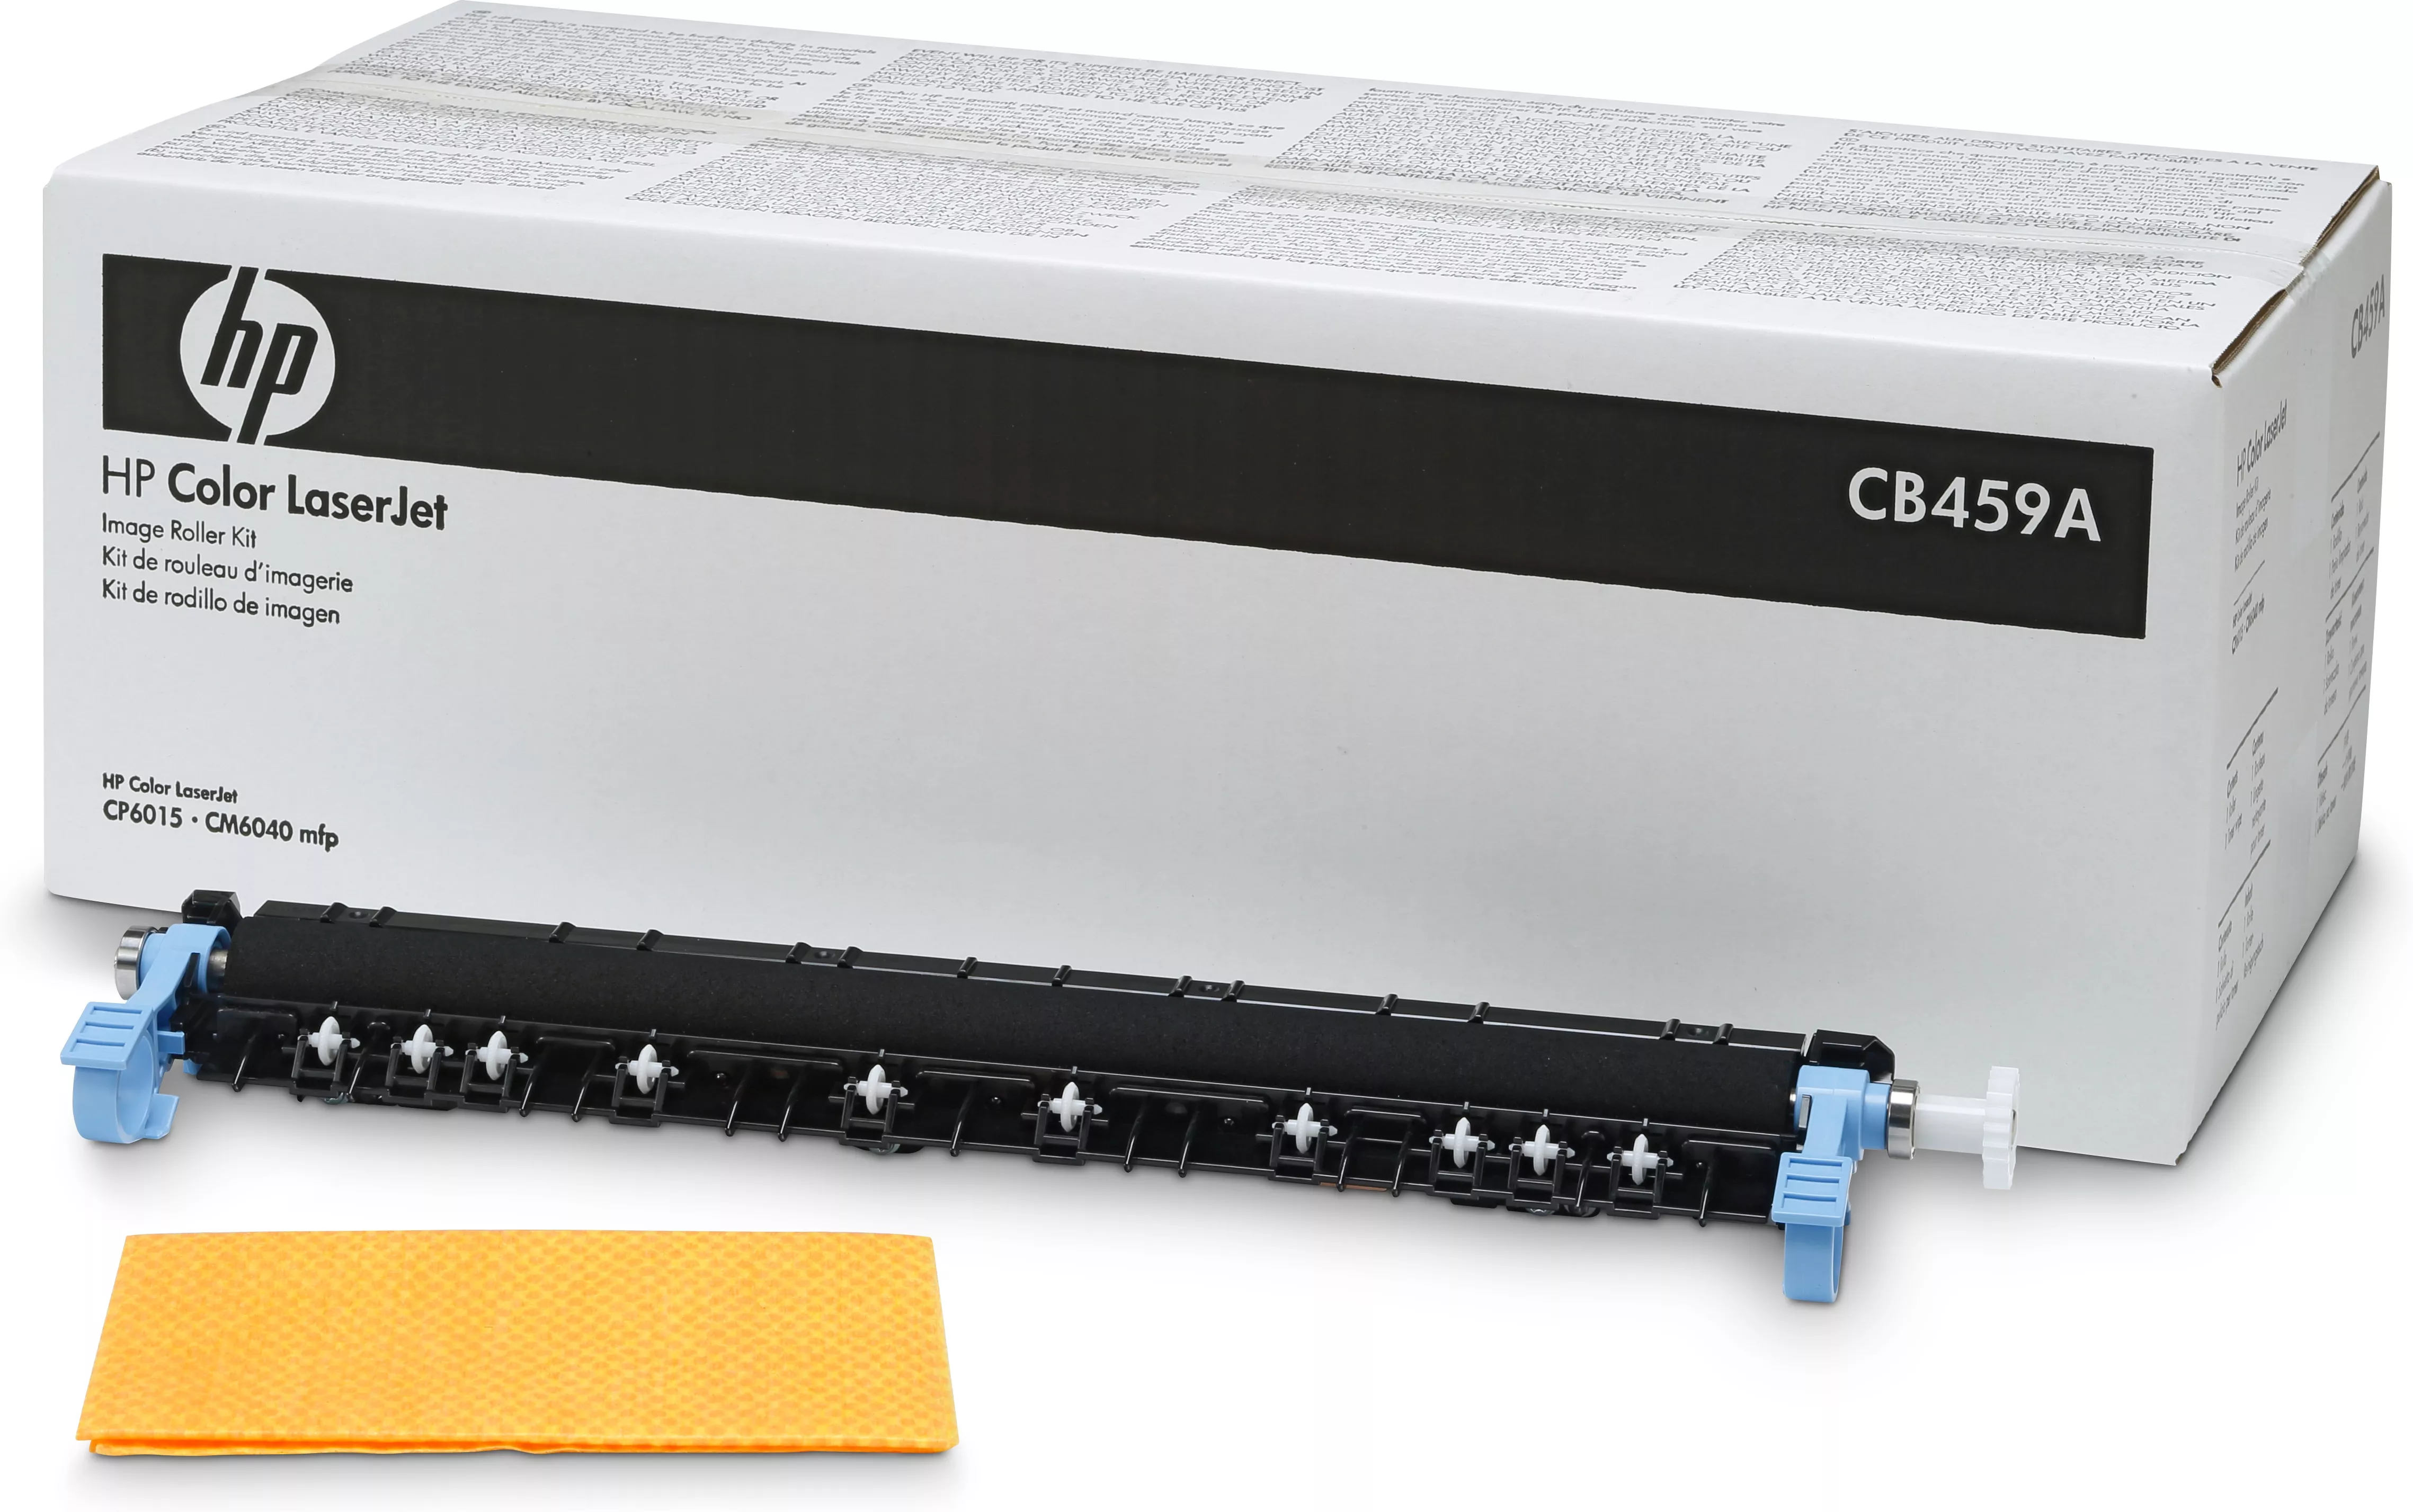 Achat HP Color LaserJet CB459A Roller Kit - 0882780488793